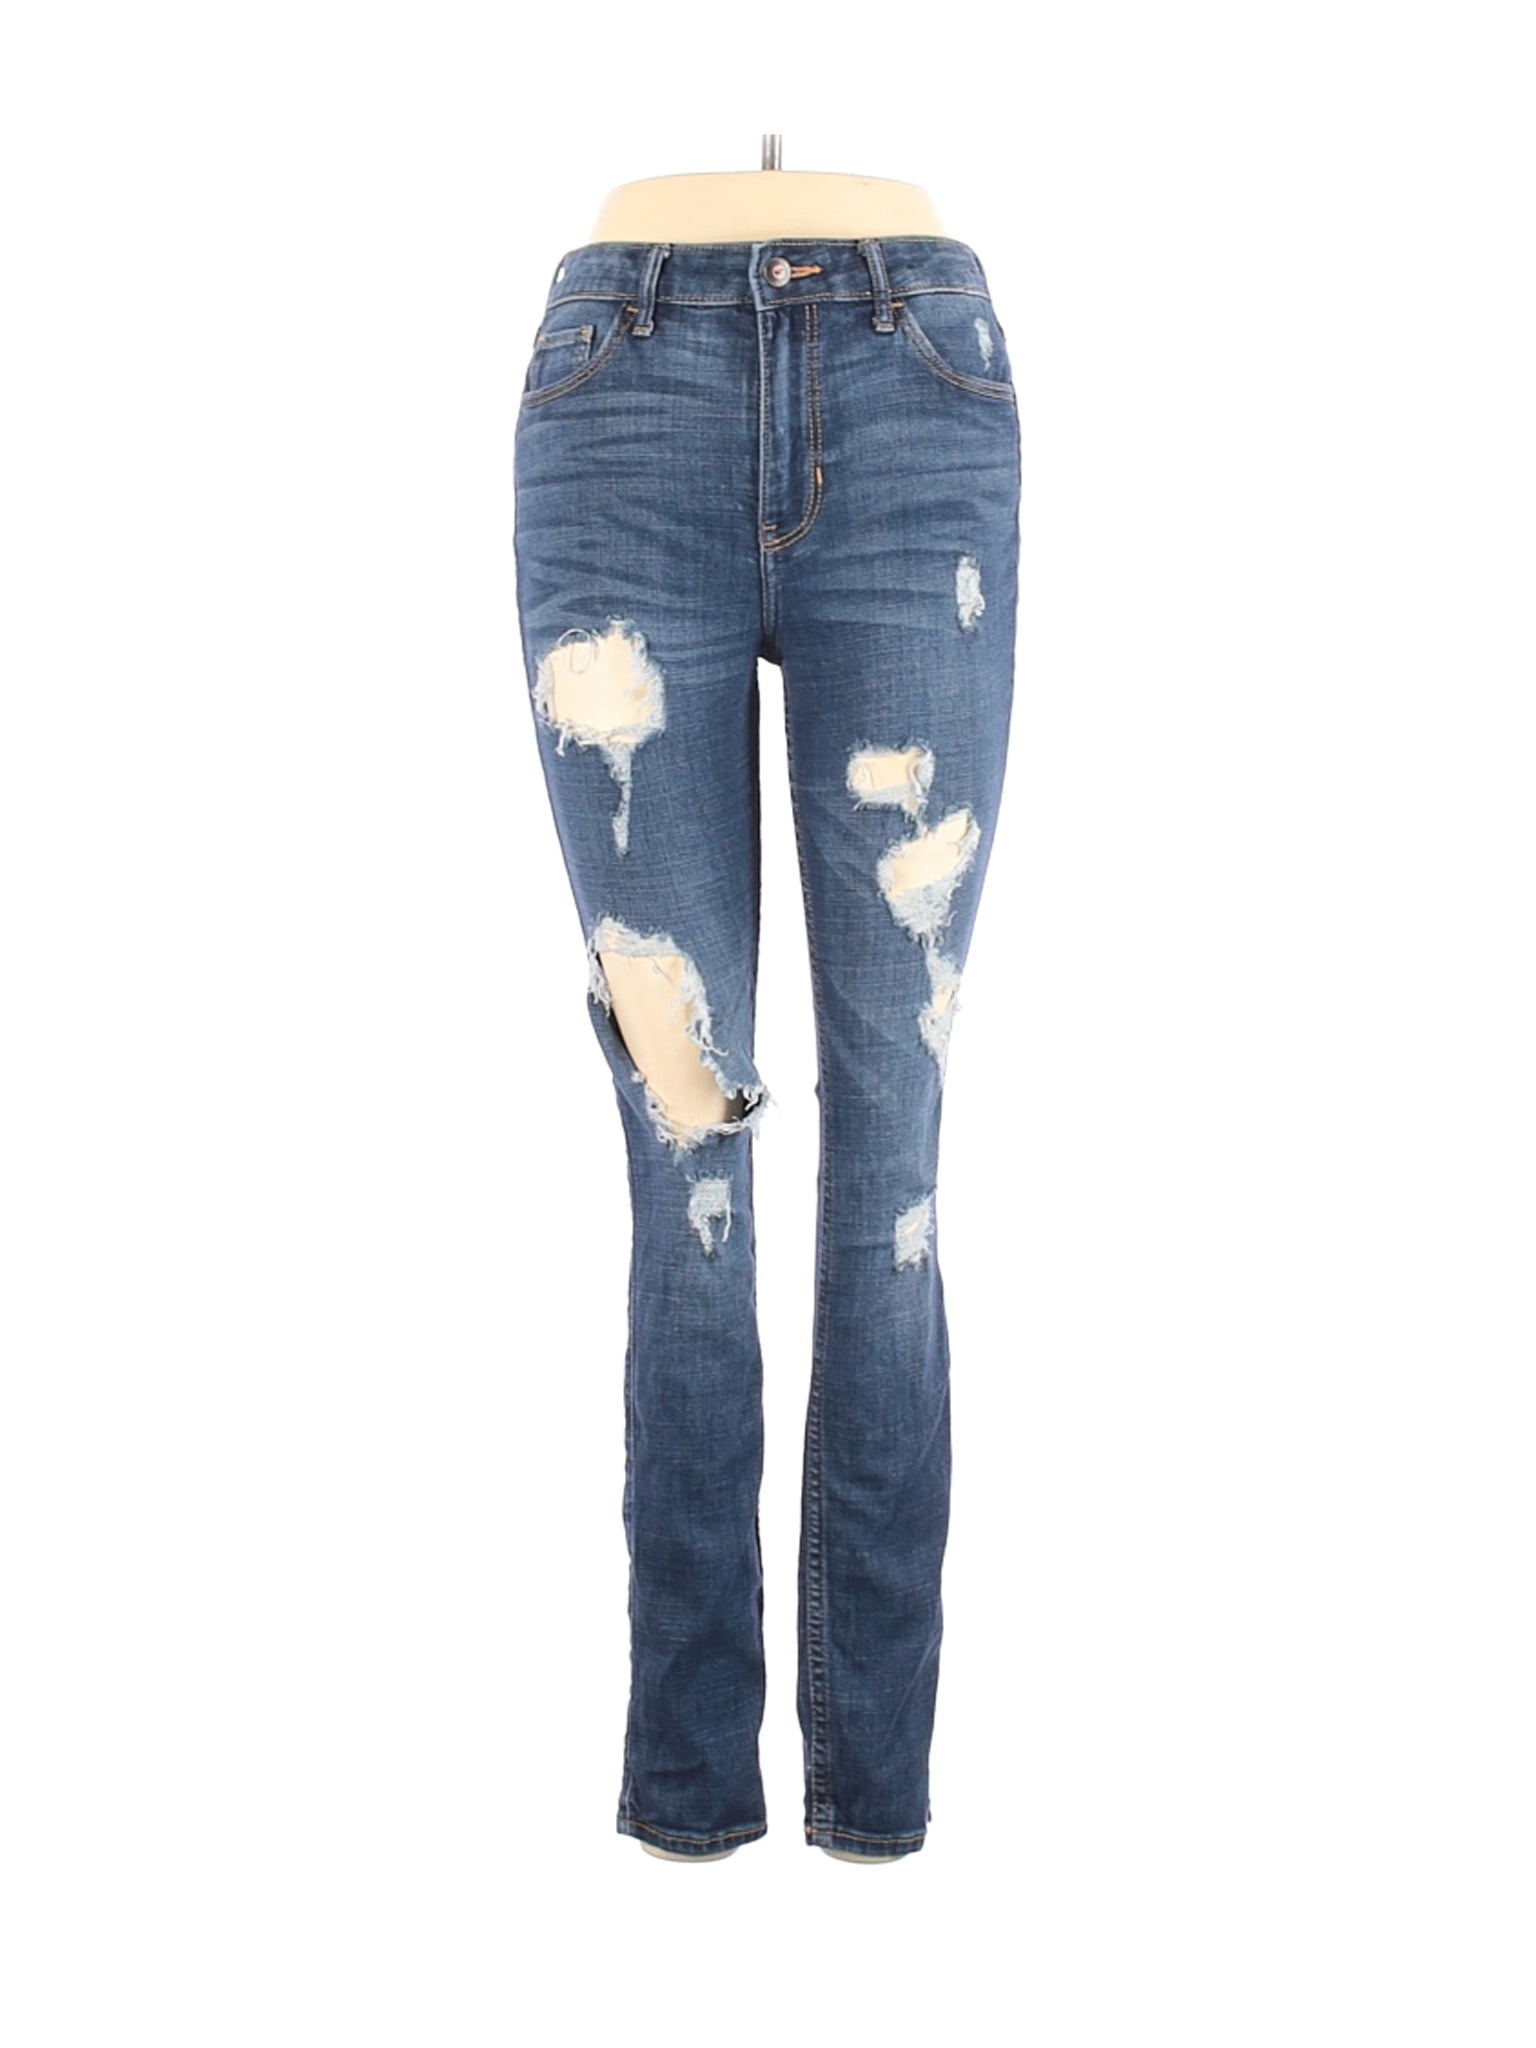 hollister size 5 jeans